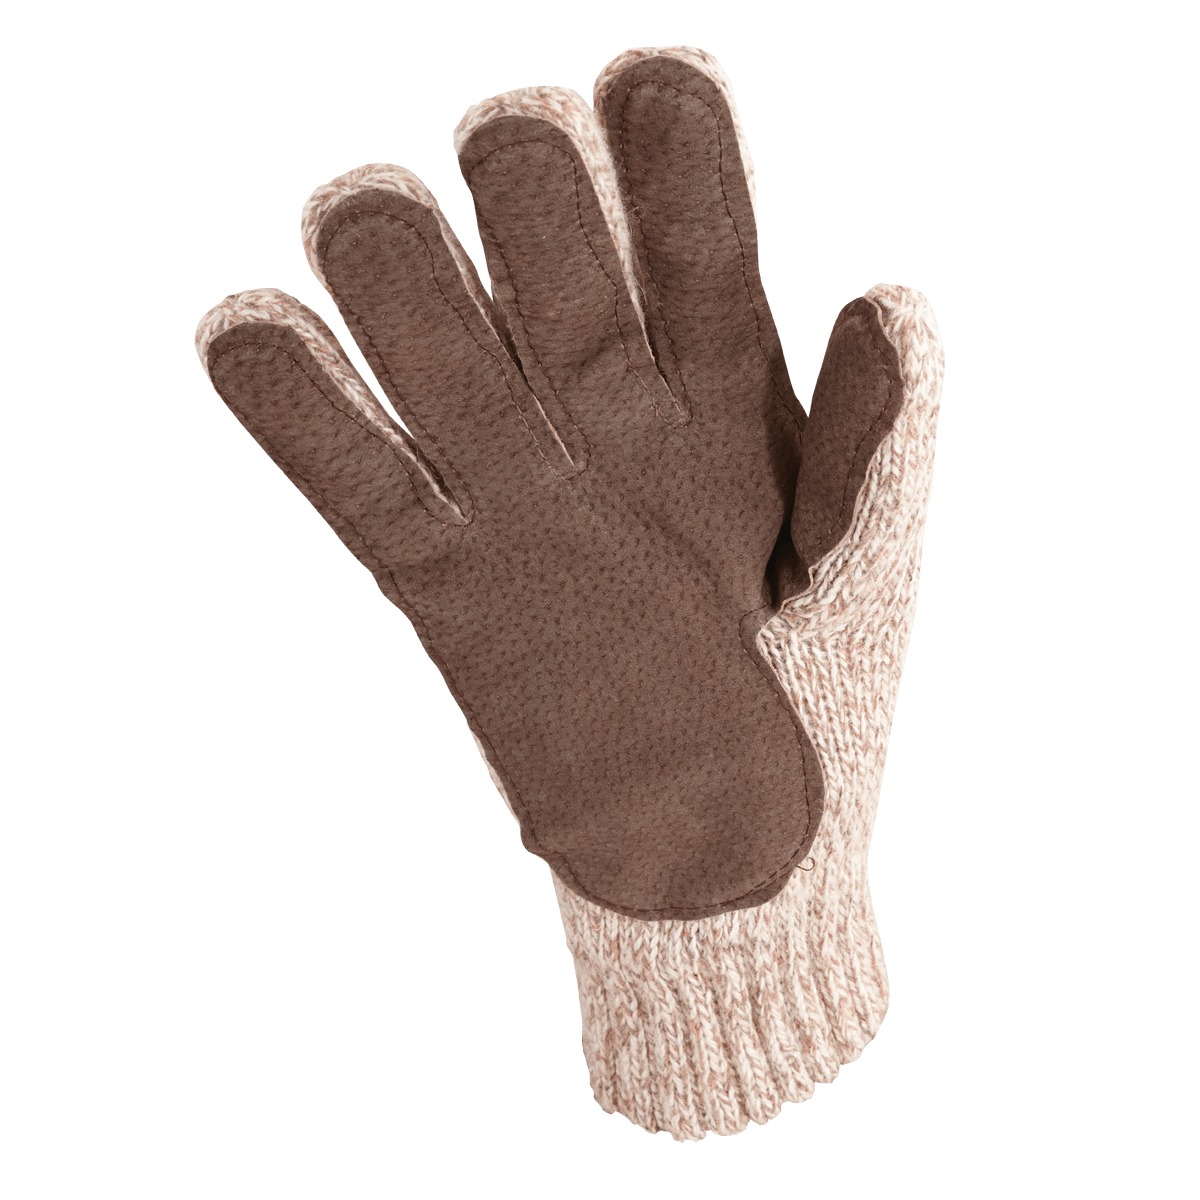 Grand Sierra Men's Ragg Wool Insulated Winter Weather Gloves Brown Suede Palm 